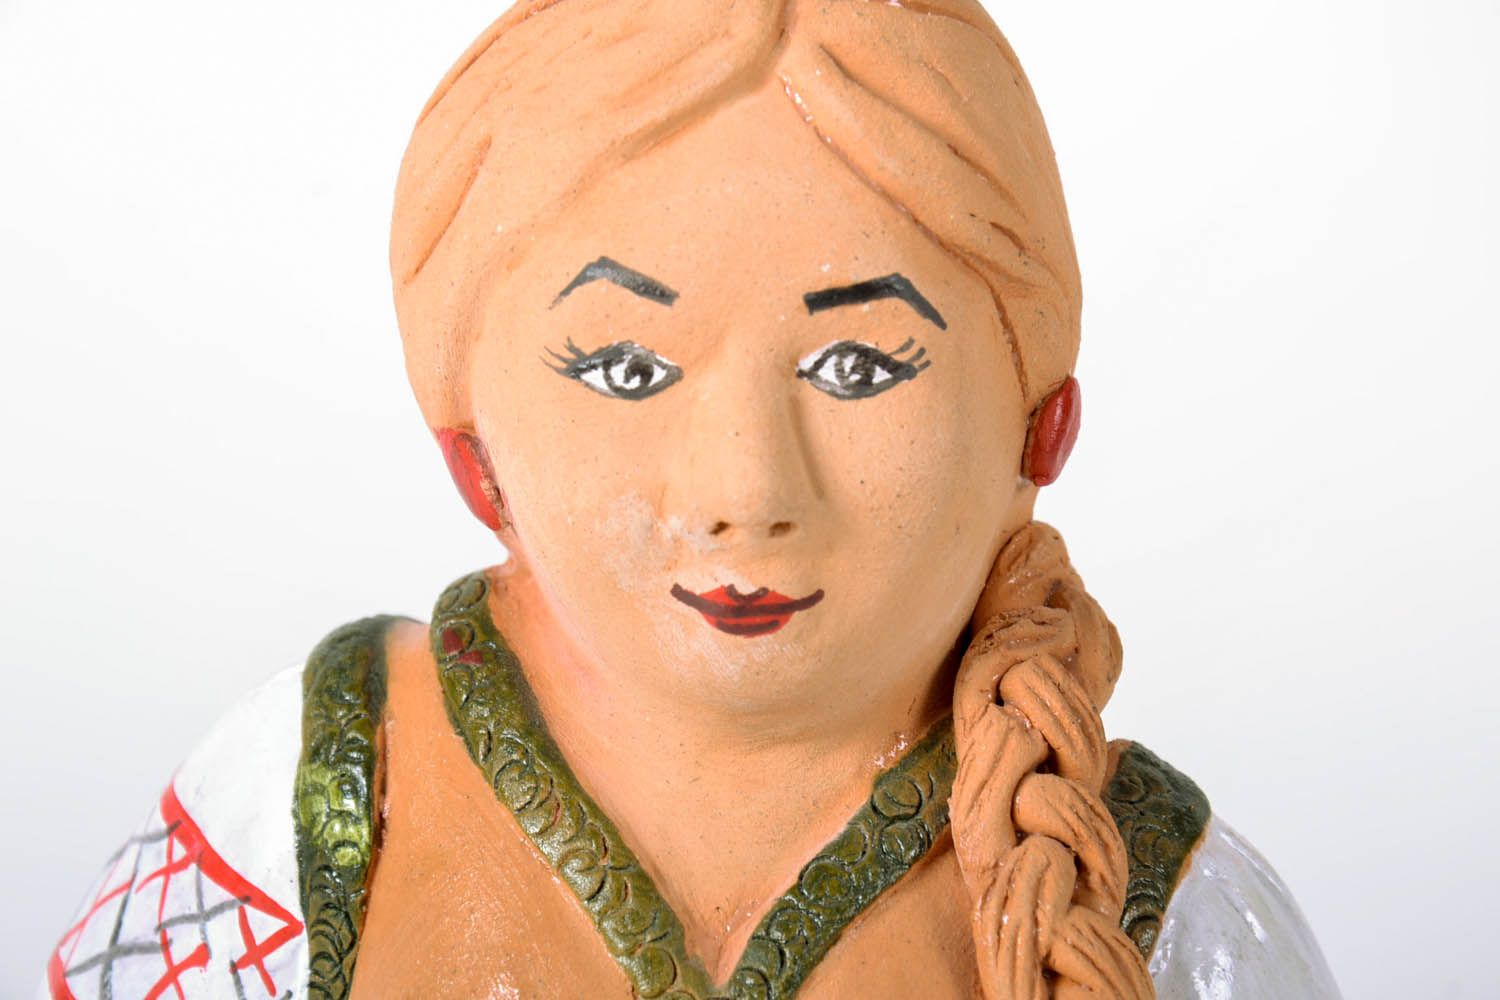 Decorative ceramic figurine photo 4